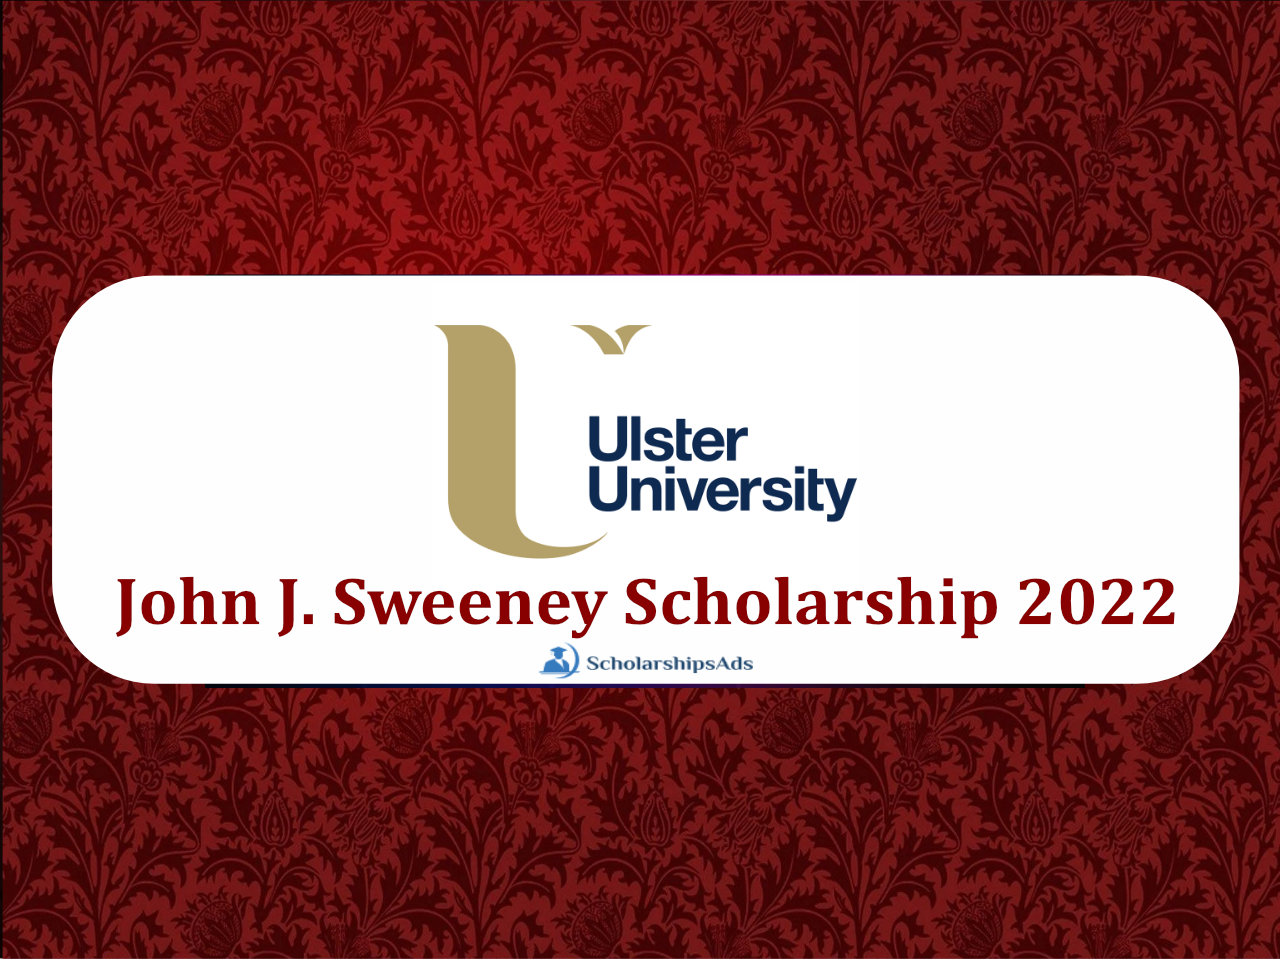 John J. Sweeney Scholarships.